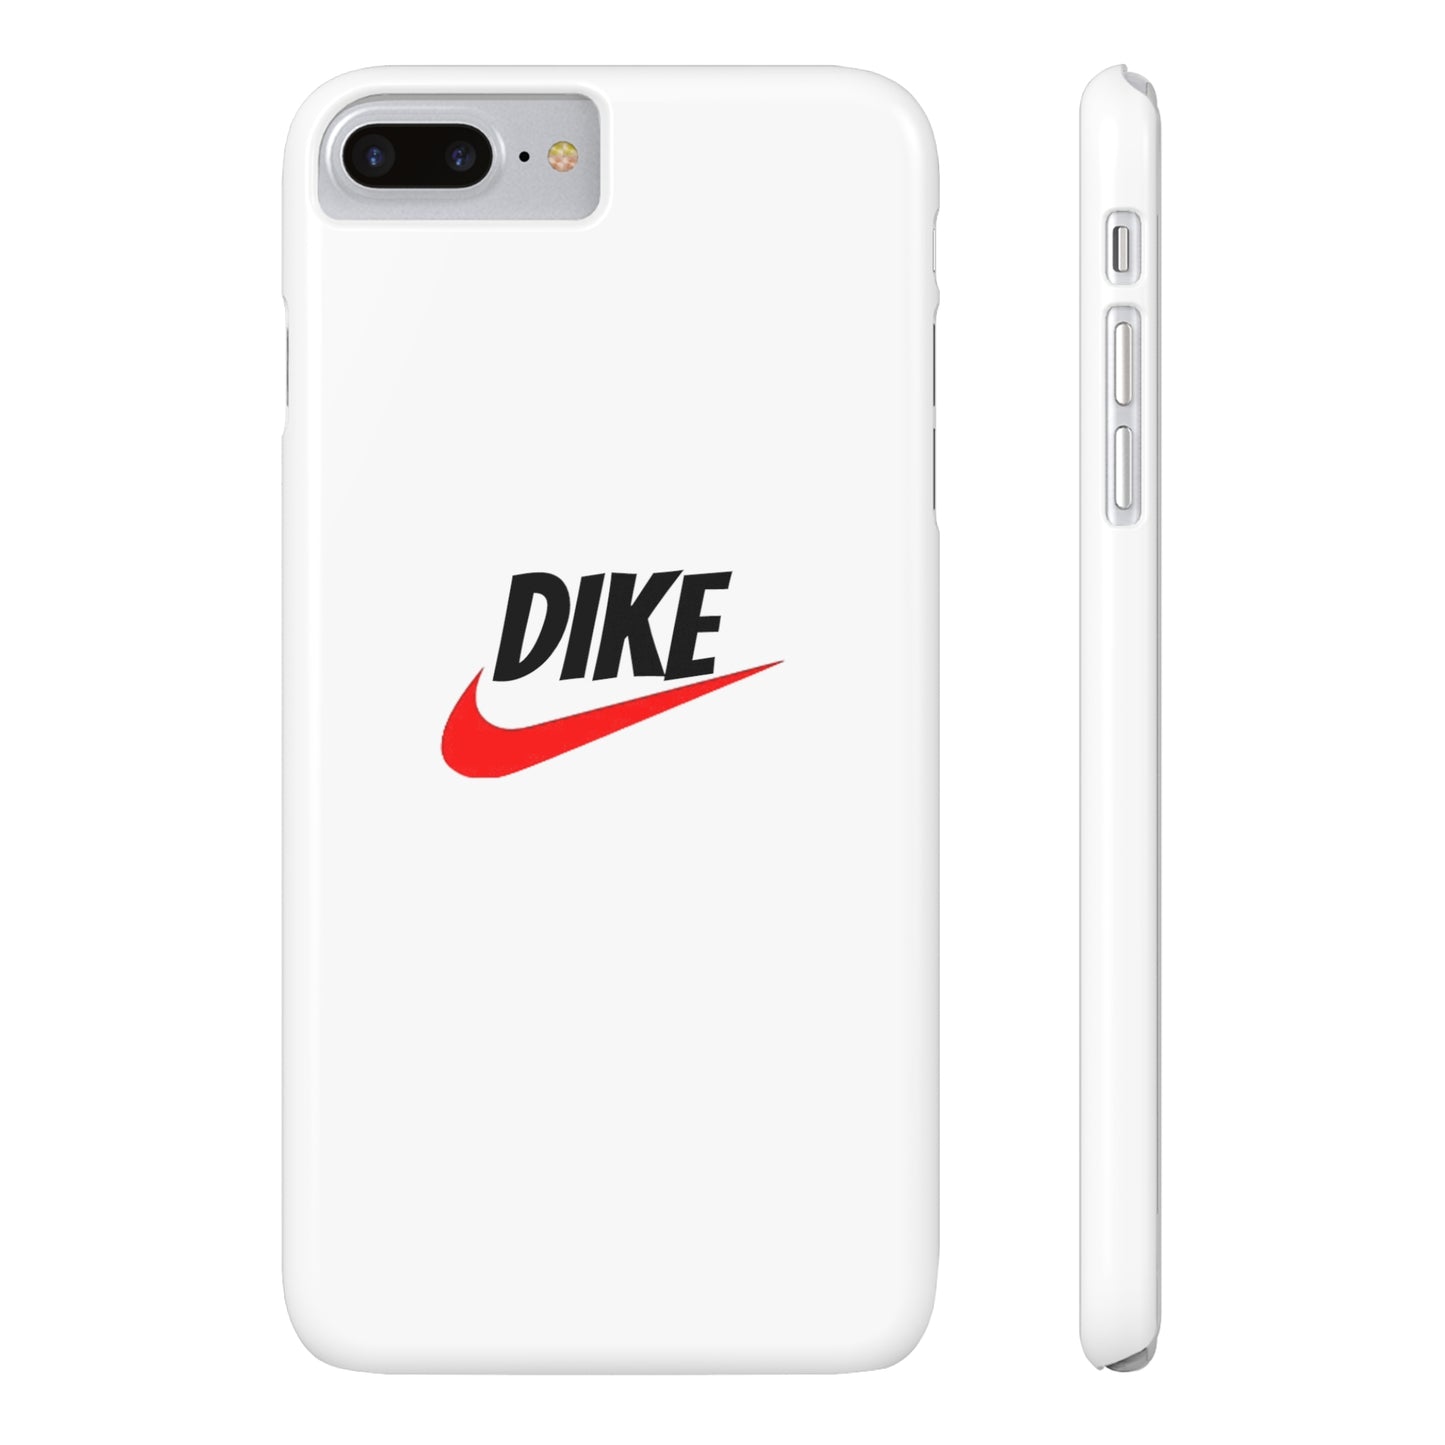 "Dike" MagStrong Phone Cases iPhone 7 Plus, iPhone 8 Plus Slim